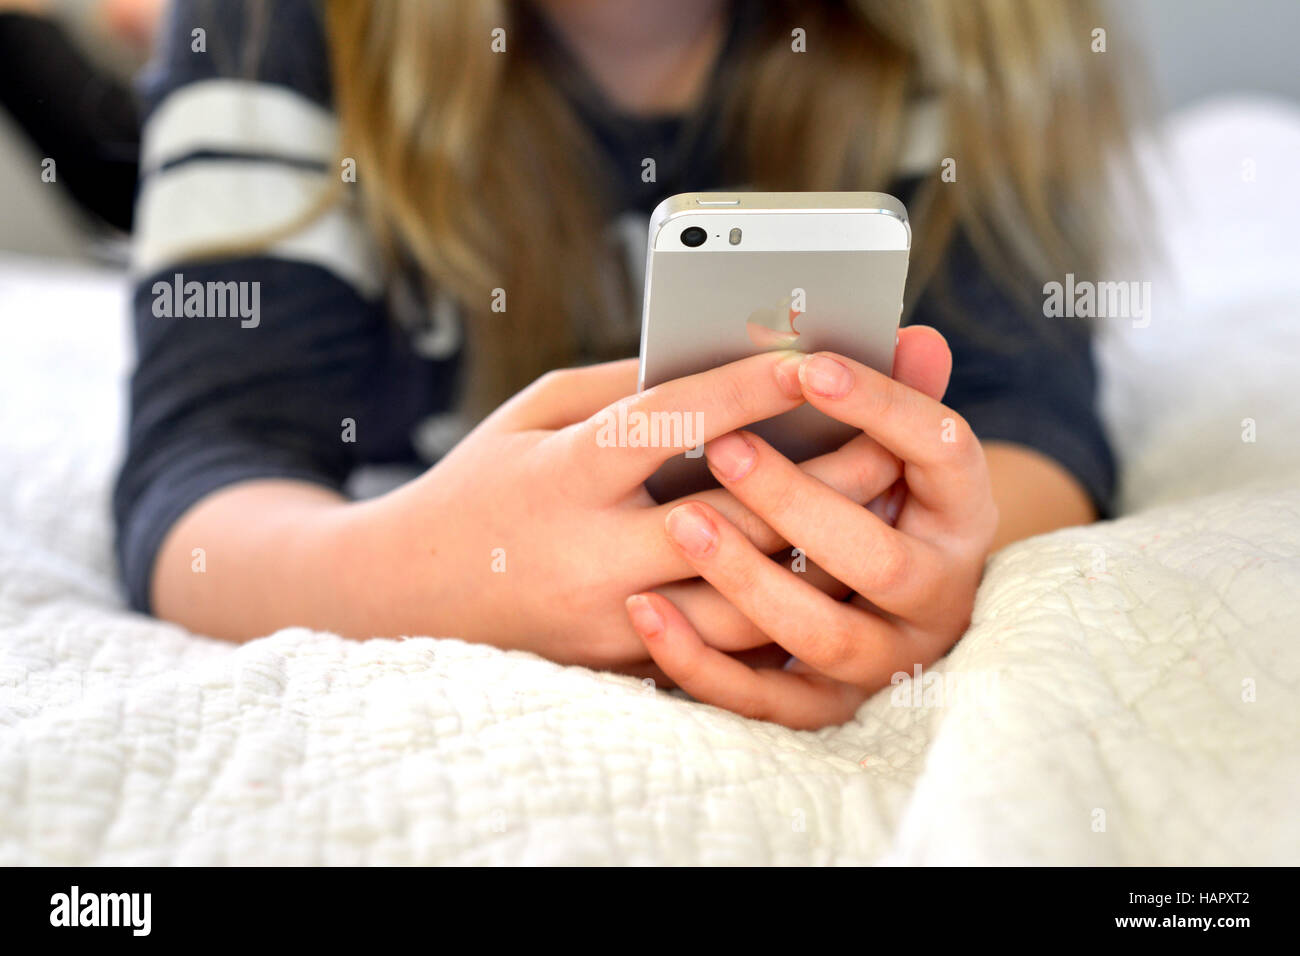 Teen / tween girl holding a mobile phone (iphone) Stock Photo